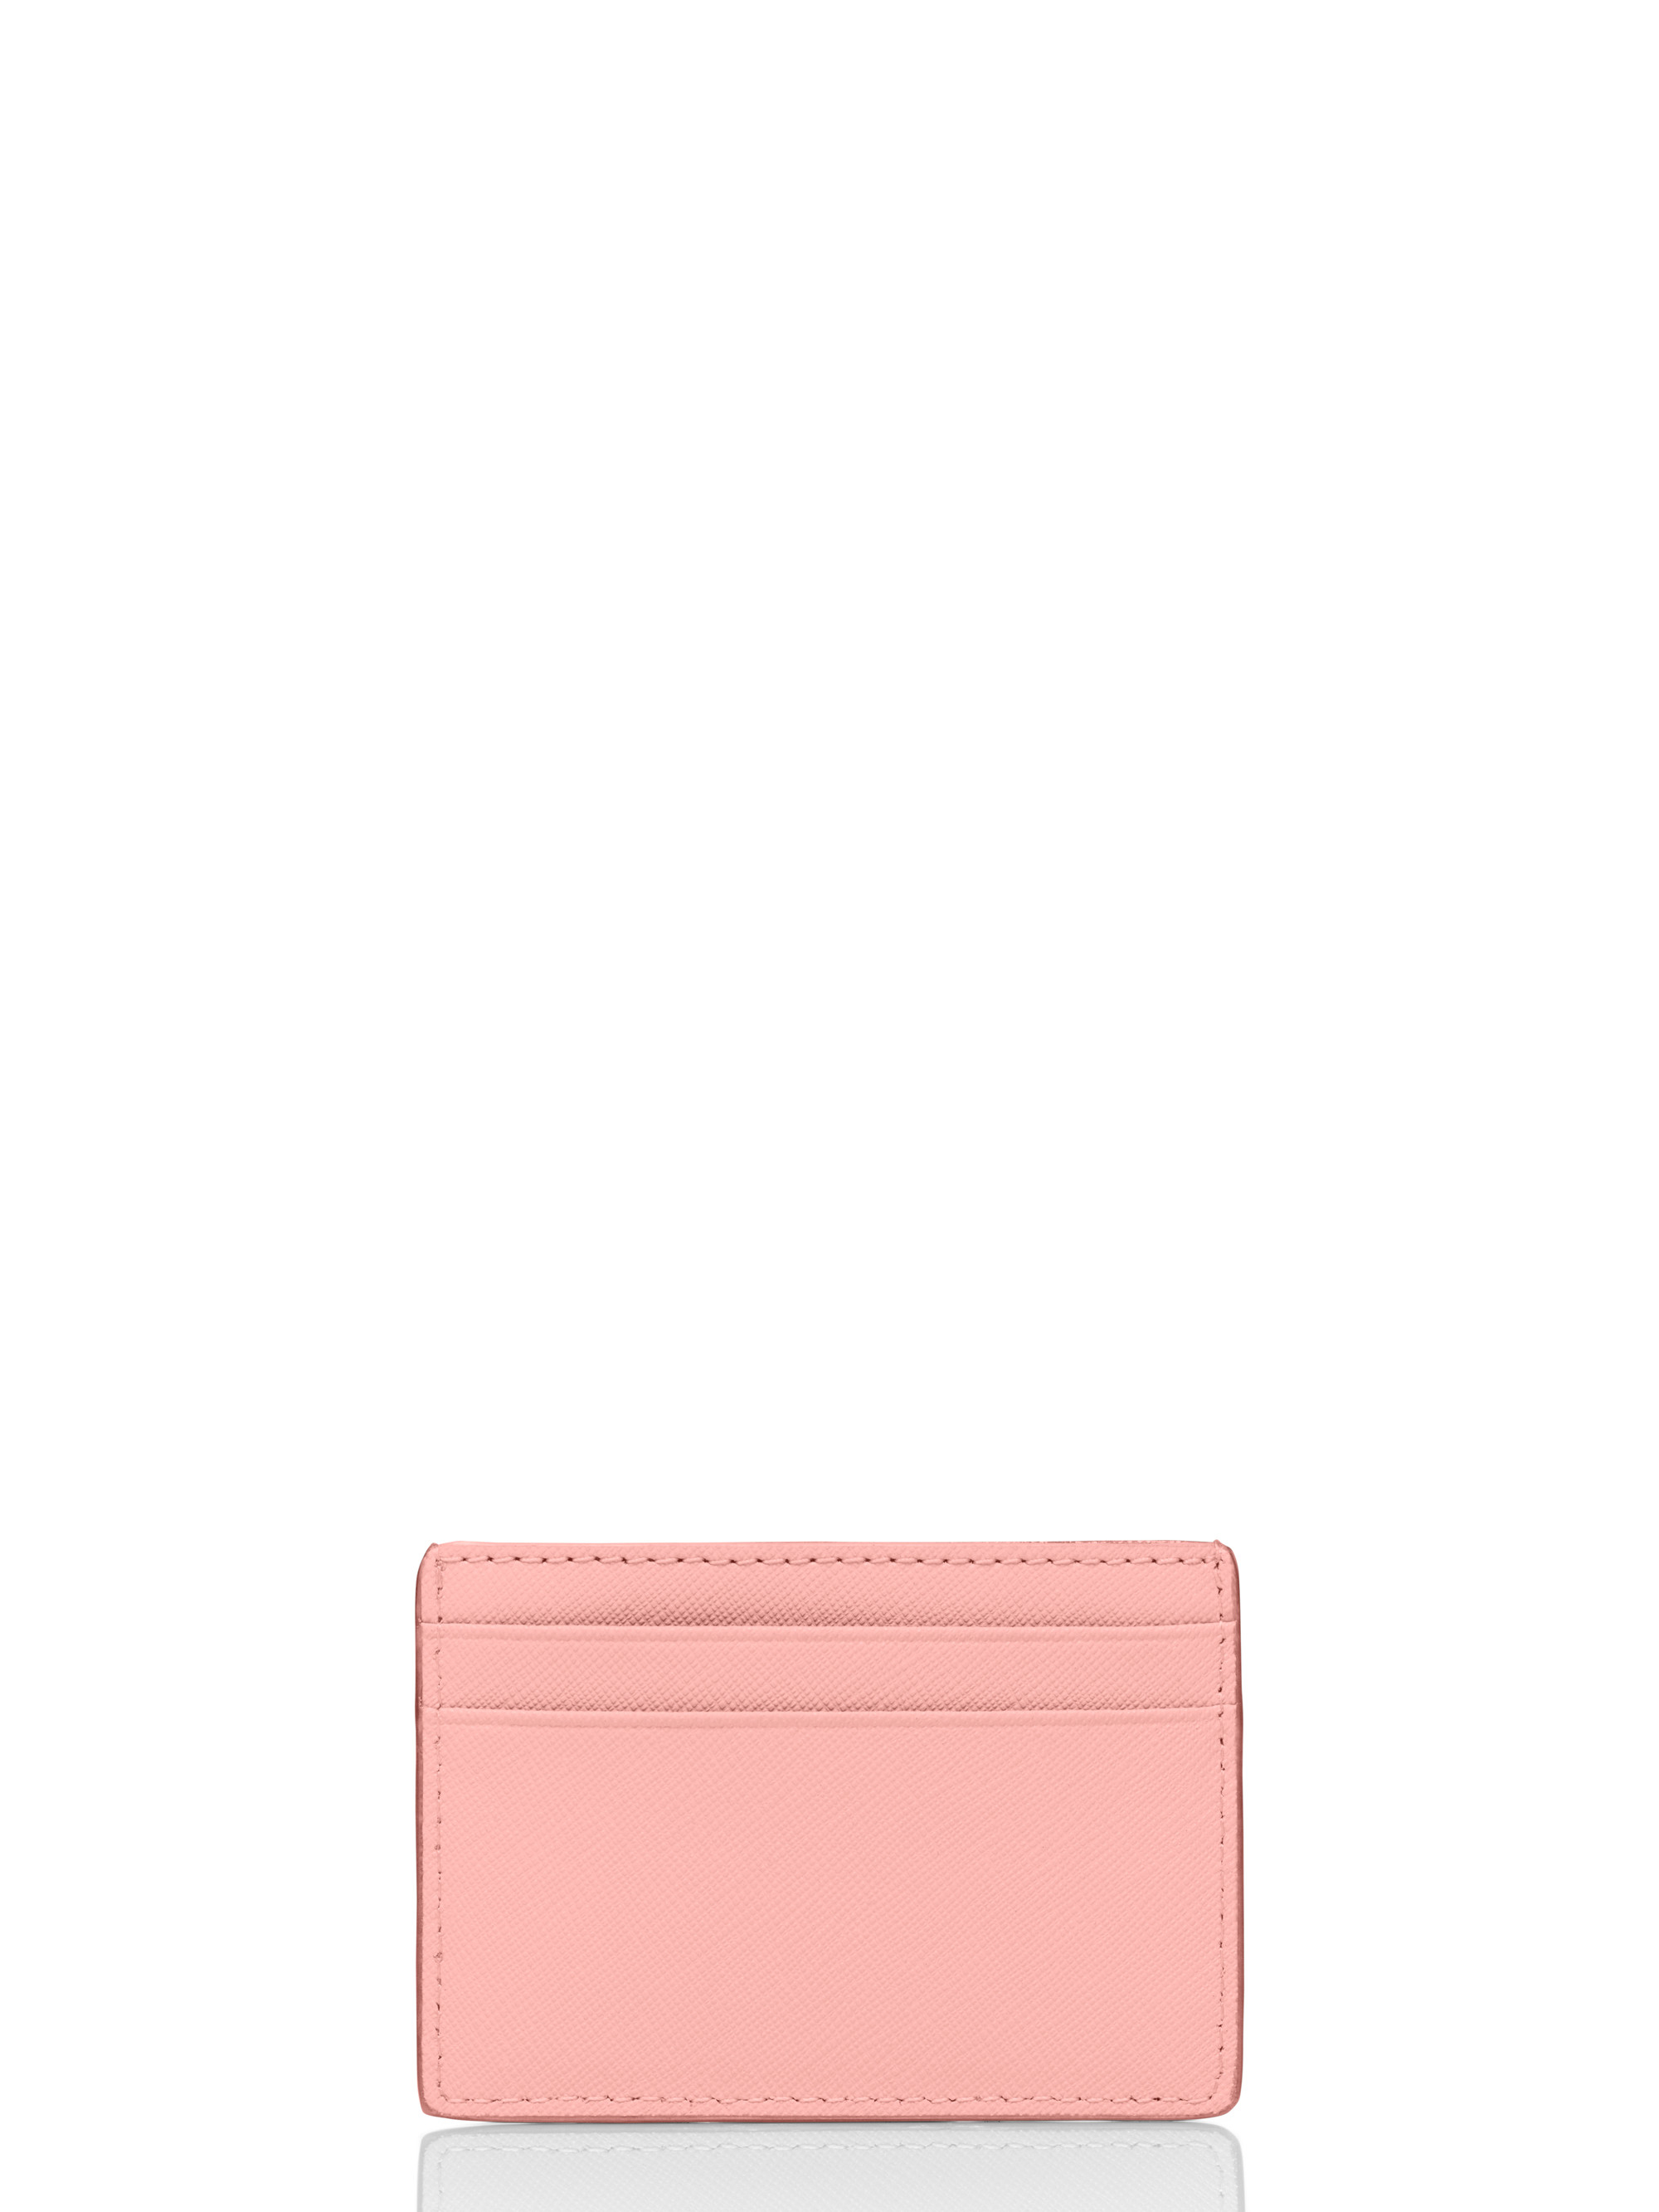 Lyst - Kate Spade New York Glitter Bug Card Holder in Pink